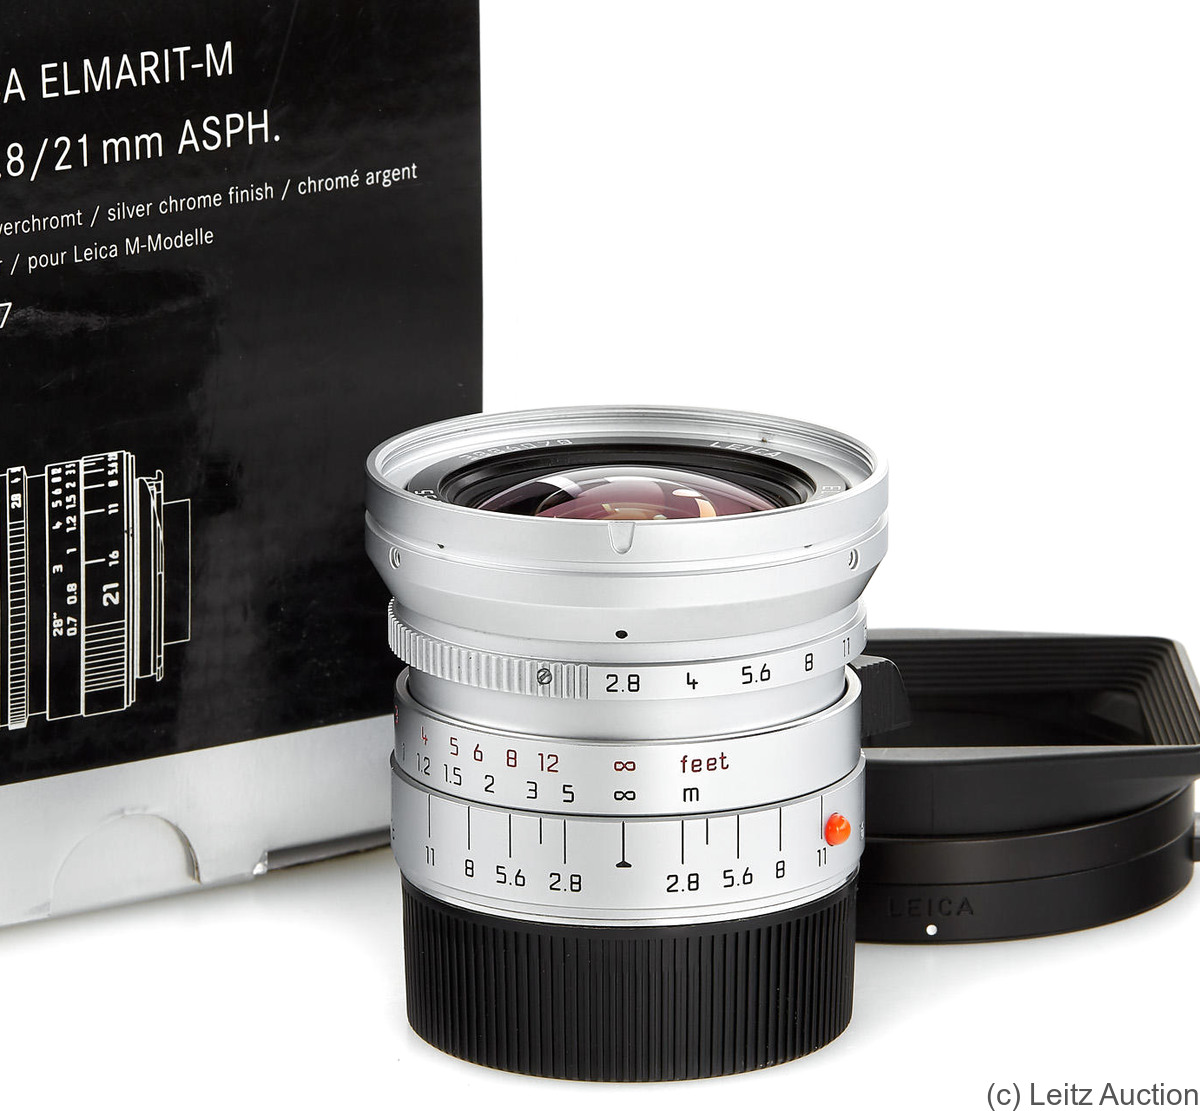 Leitz: 21mm (2.1cm) f2.8 Elmarit-M Asph. (BM, chrome) camera